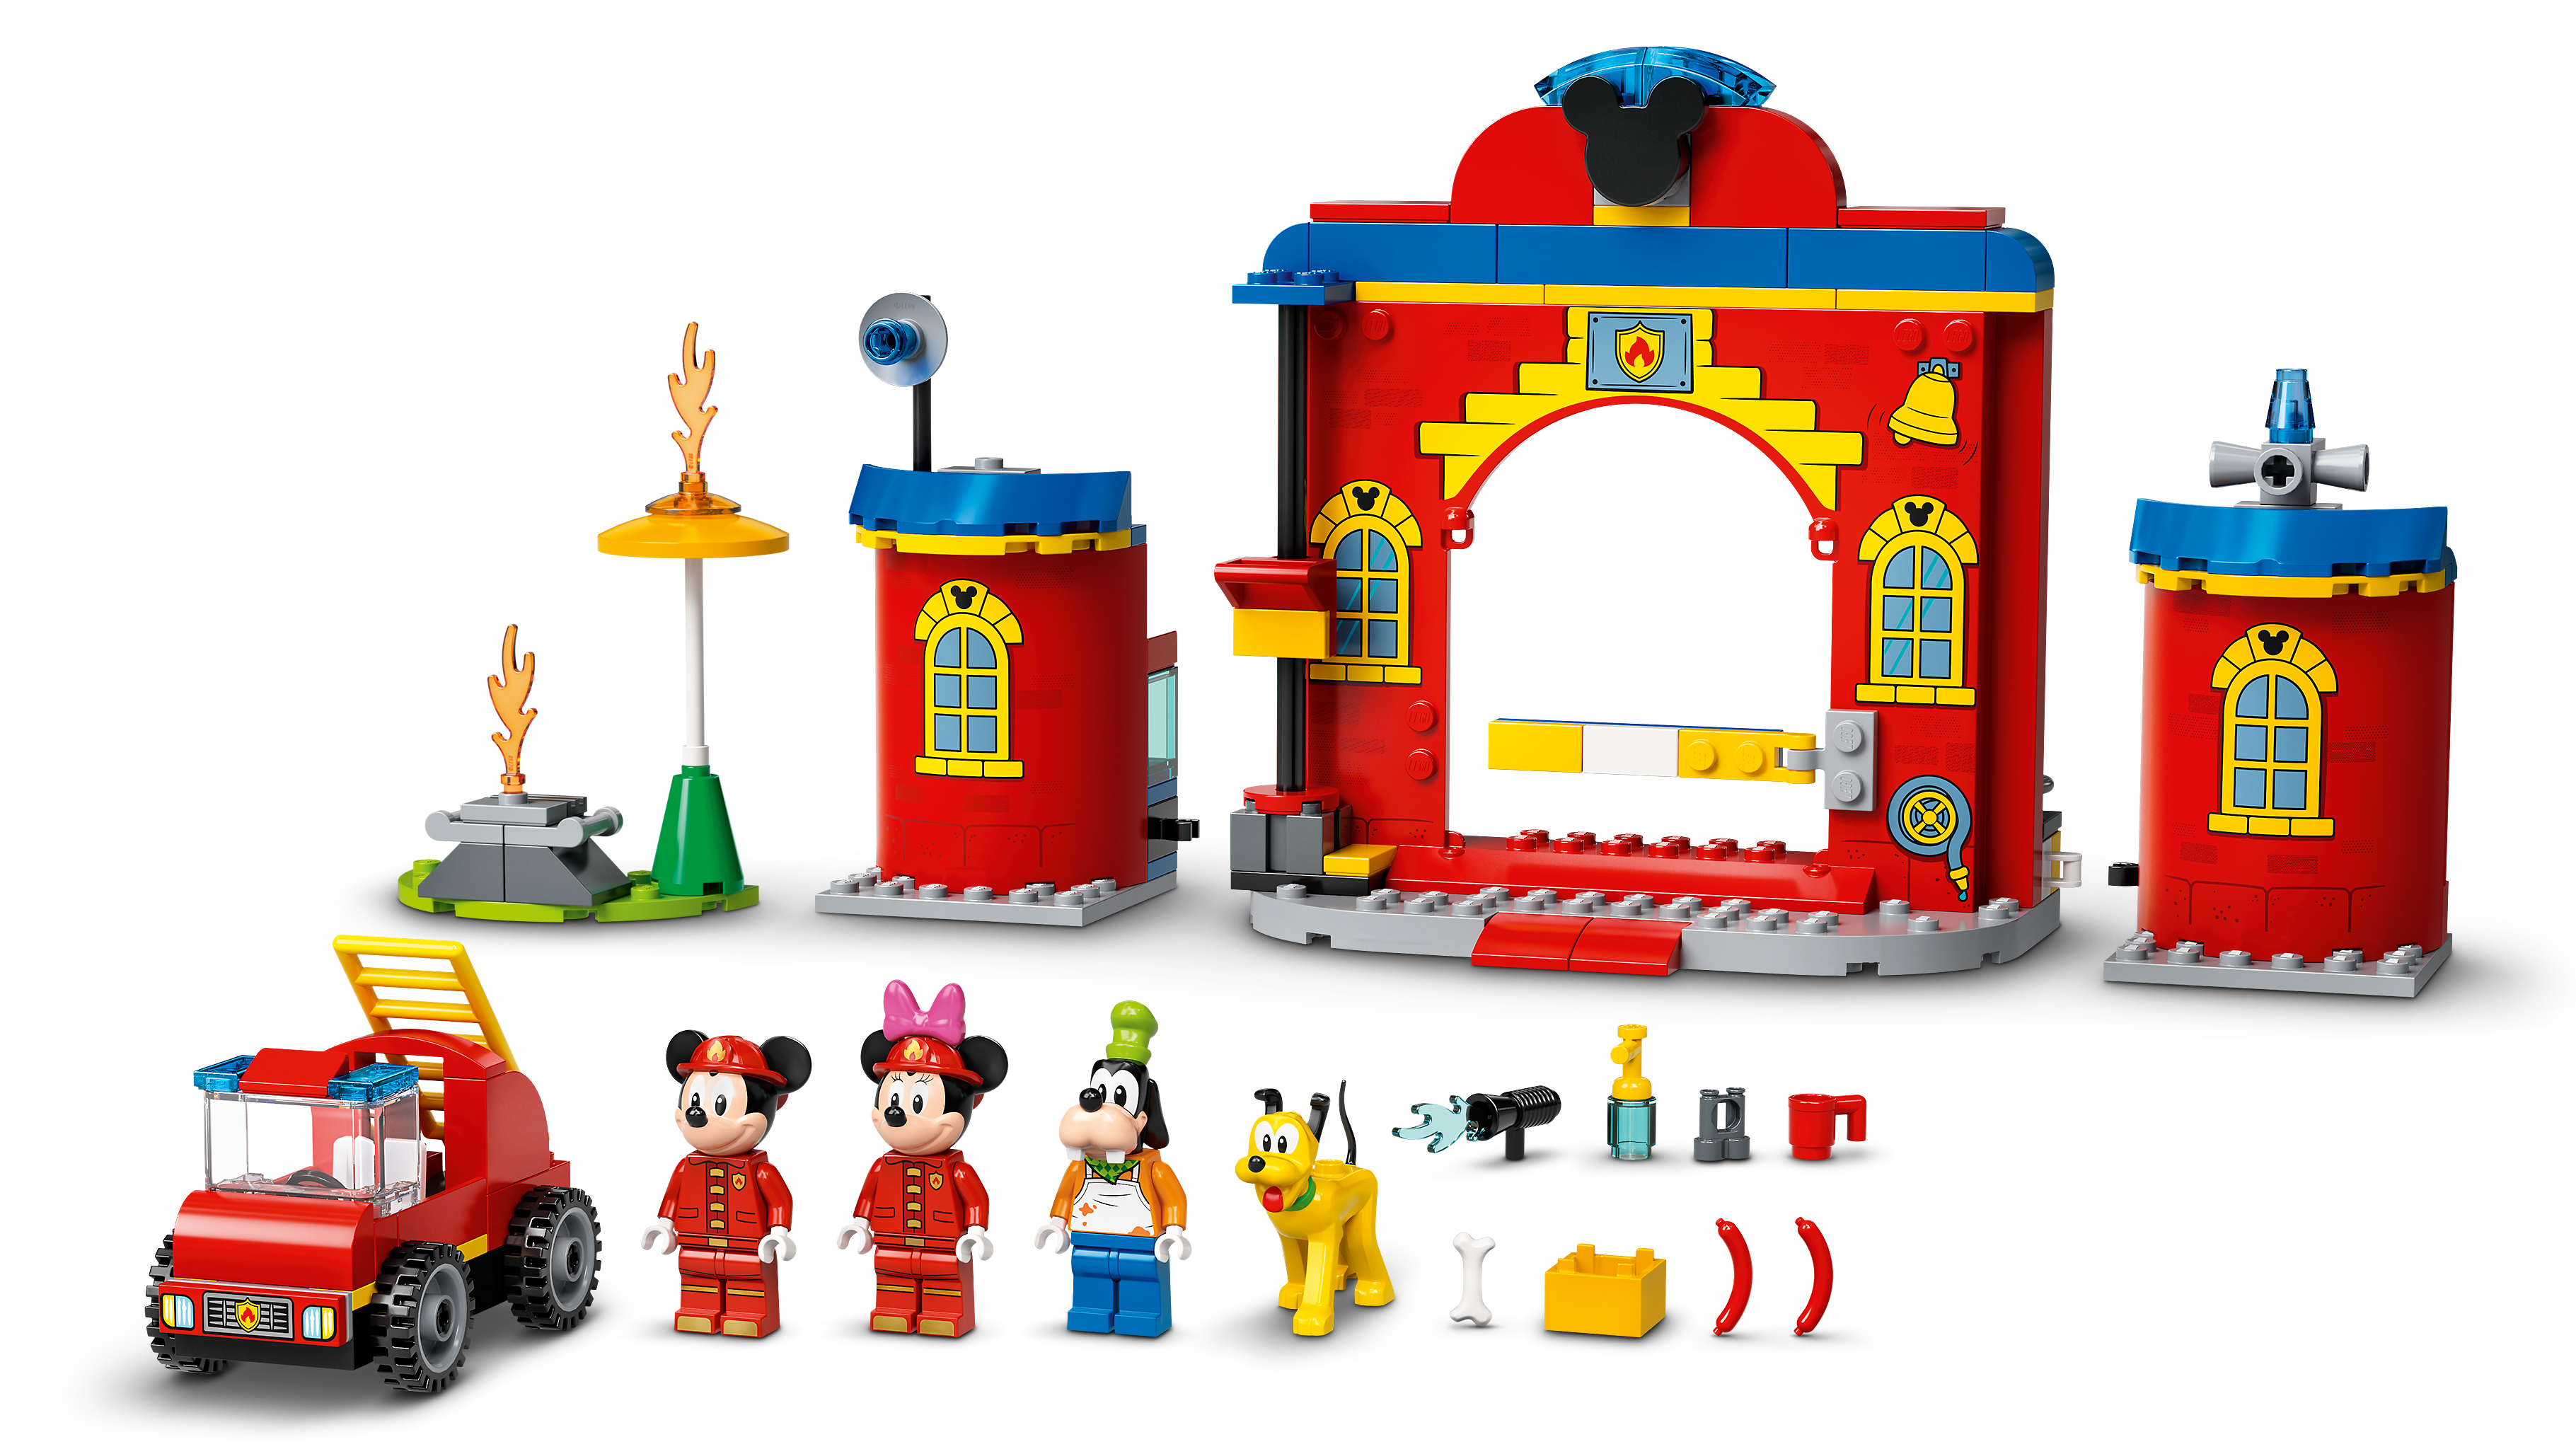 Lego 10776 Mickey & Friends Fire Truck & Station